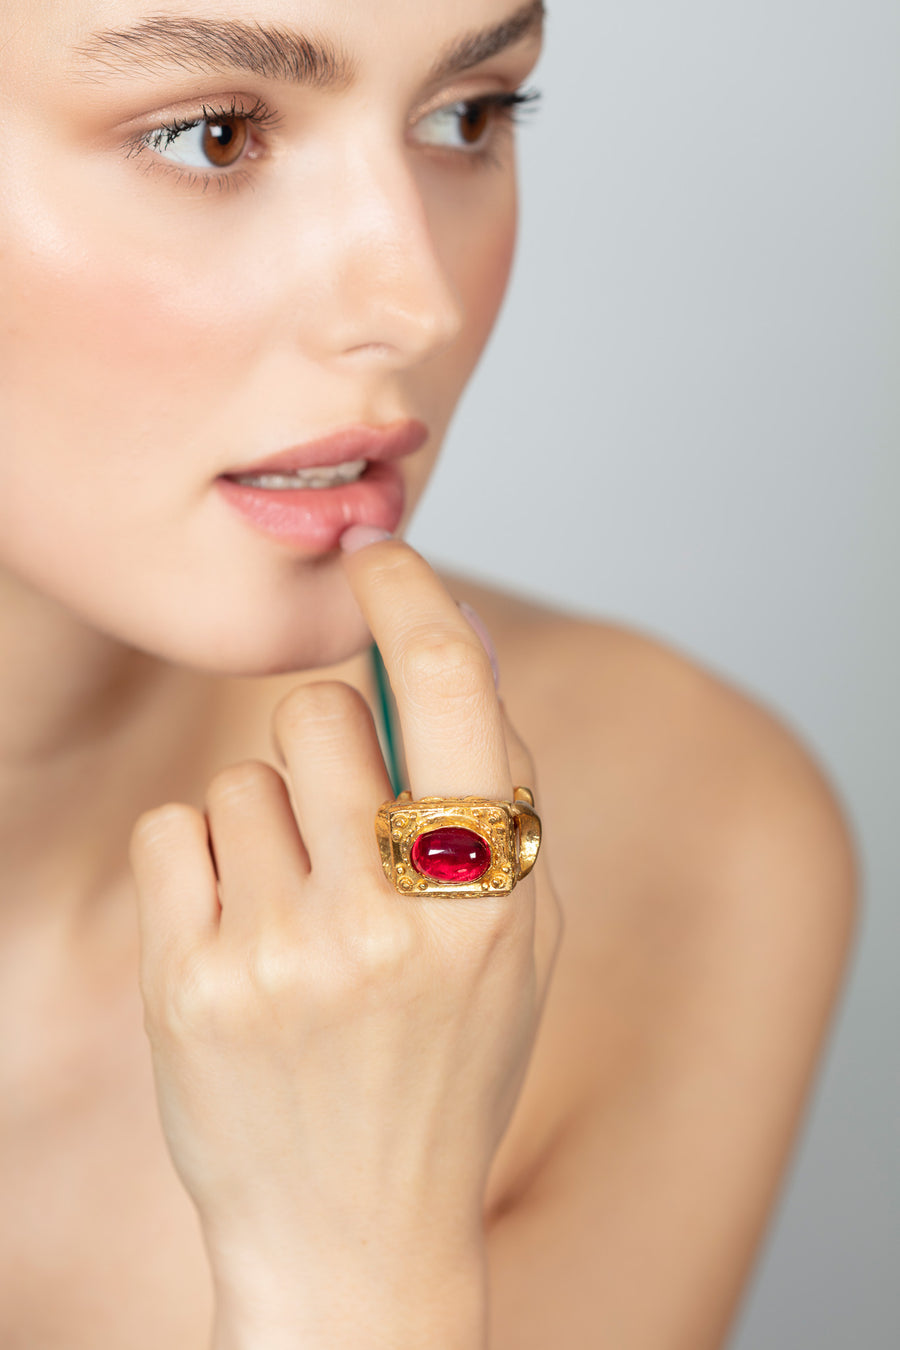 Ottoman Gold Ring